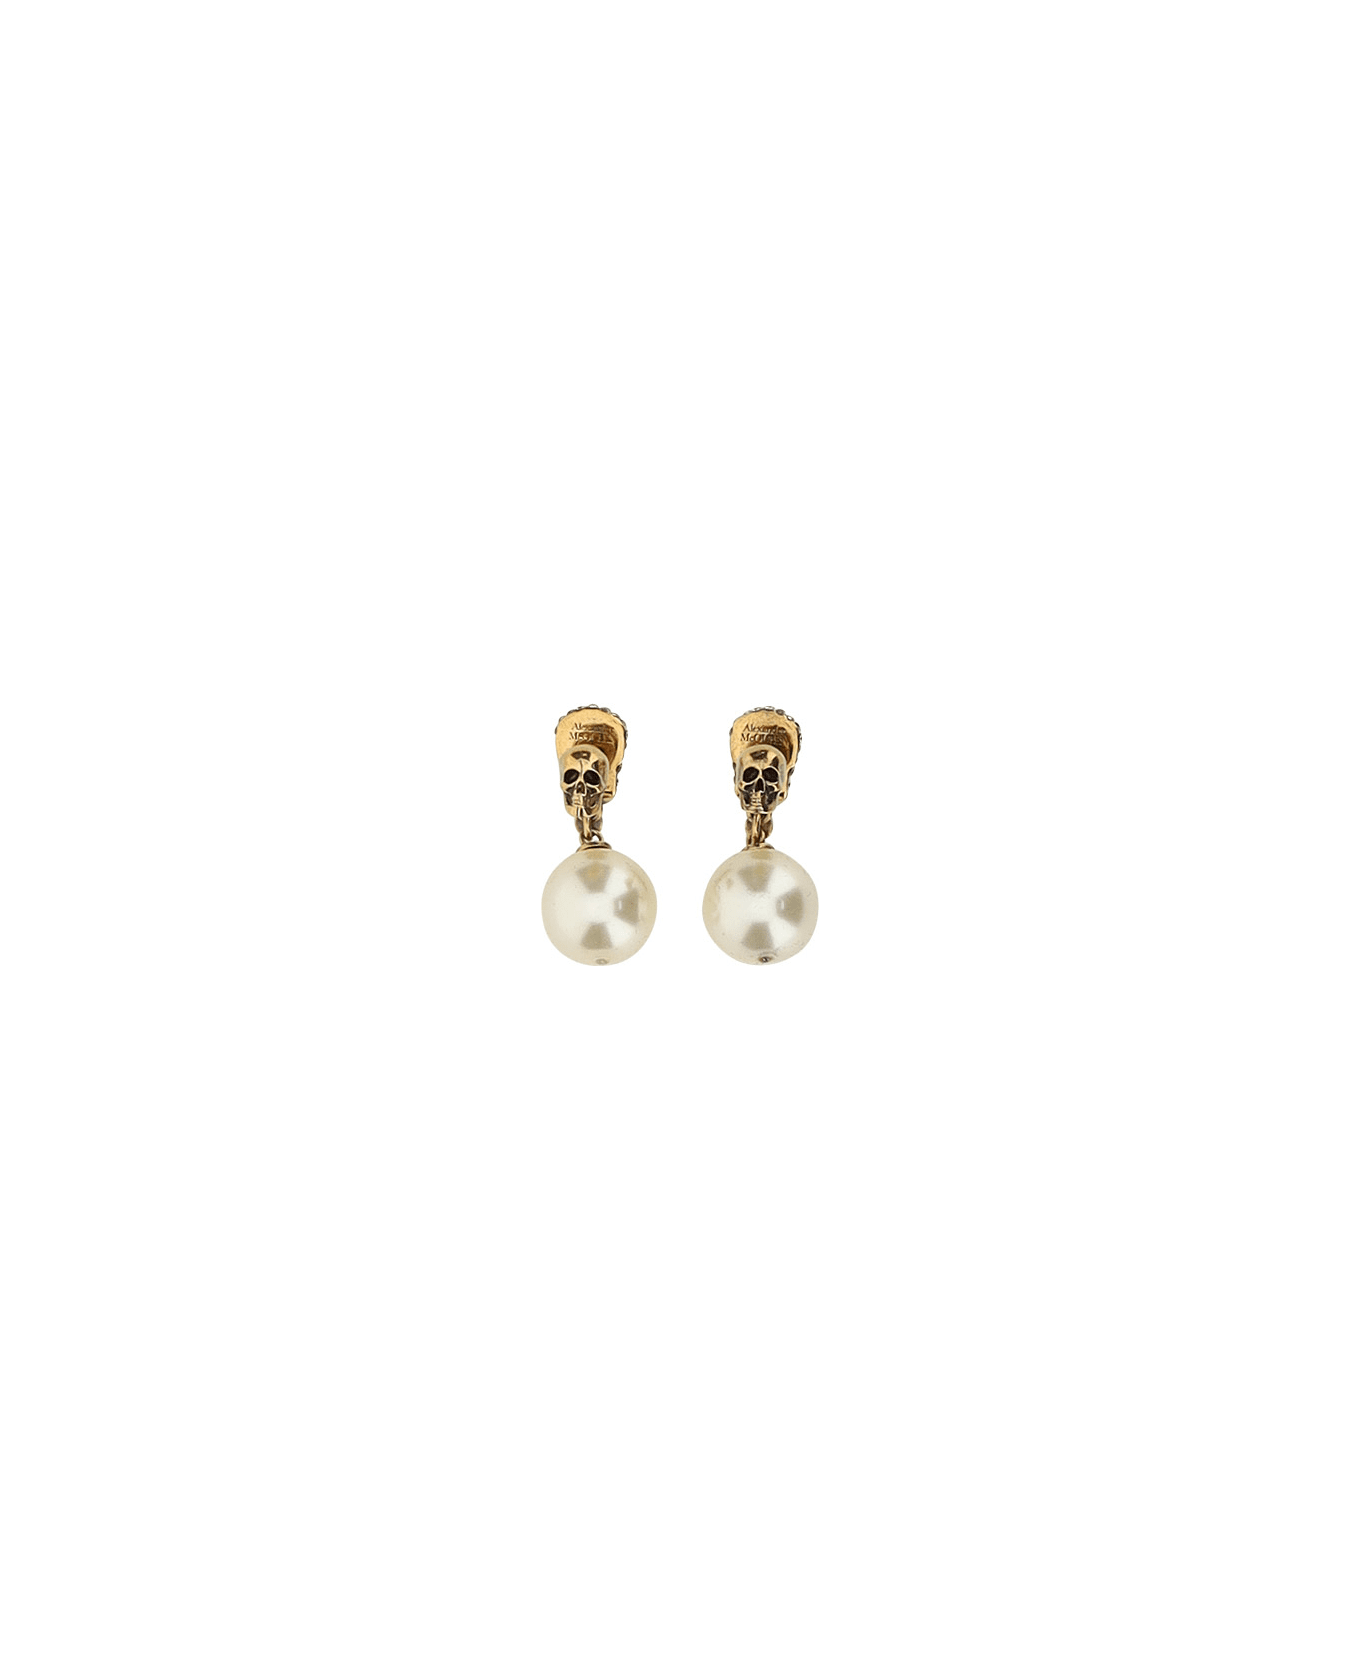 Alexander McQueen Pearl Earrings - Antique gold イヤリング